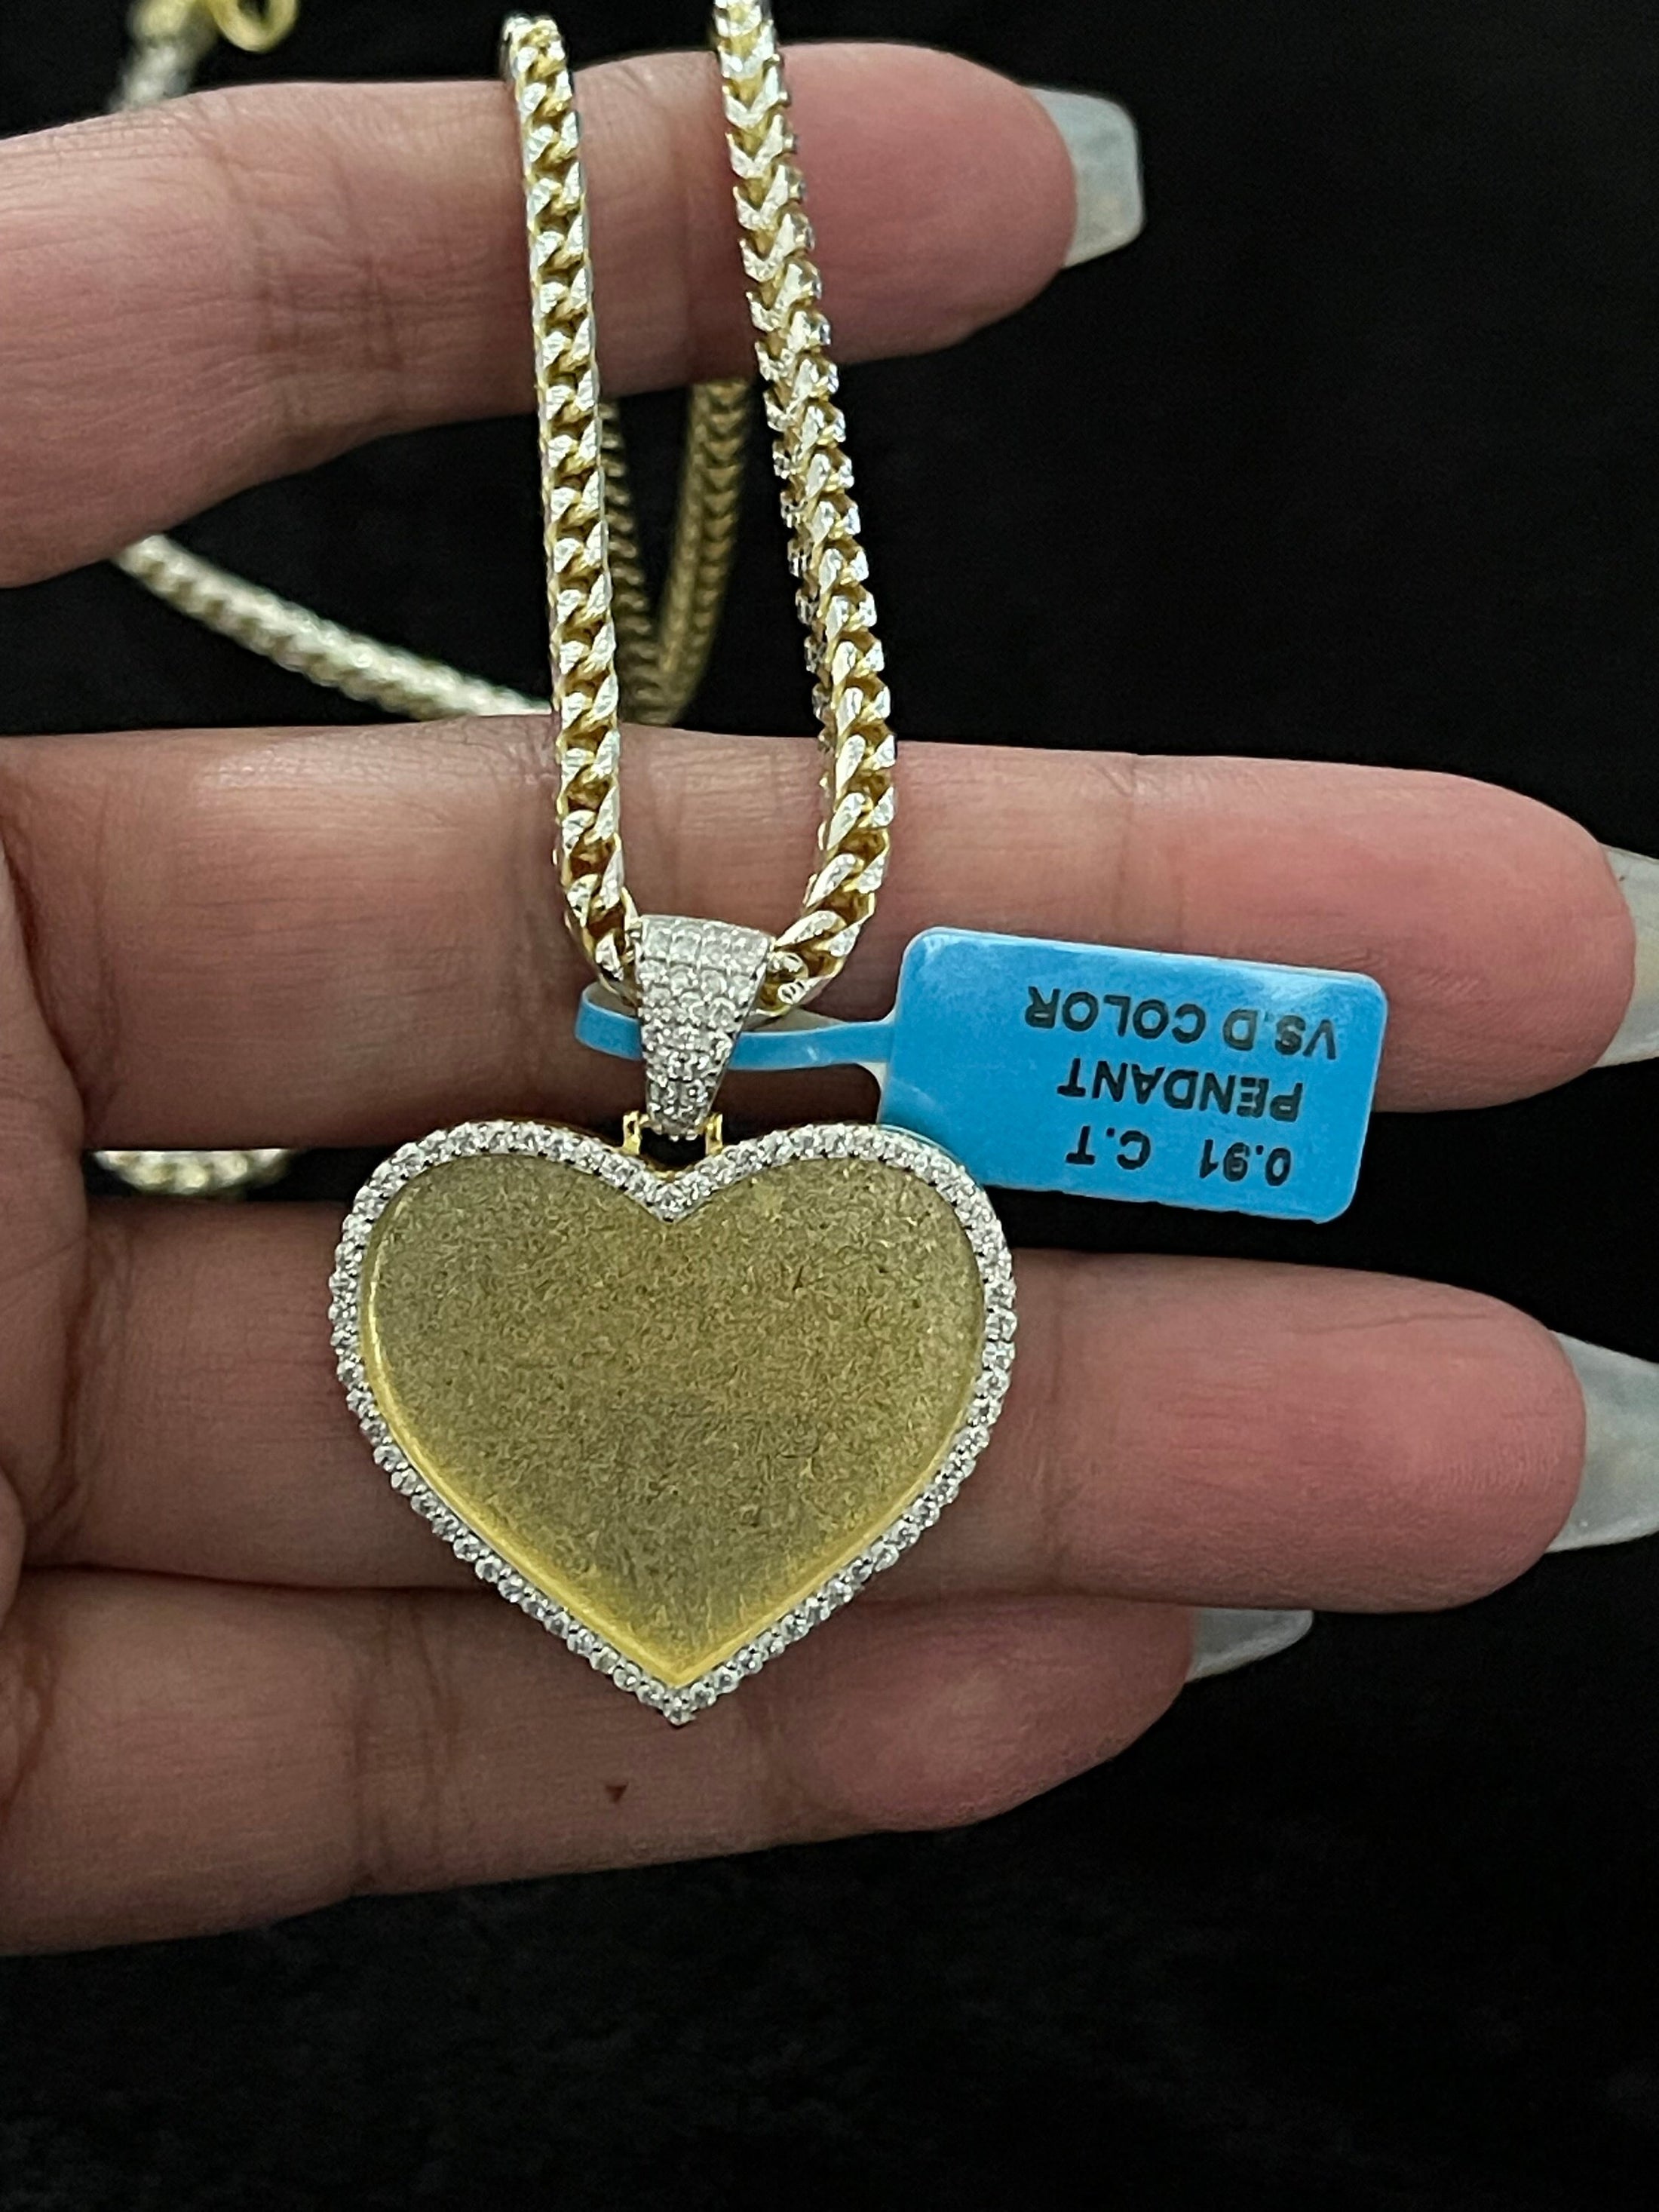 VVS Certified Lab Diamond Keepsake Memorial Pendant, 100% Passes Diamond Testers, Picture Pendant, Memory Charm, Gift For Her, Heart Pendant